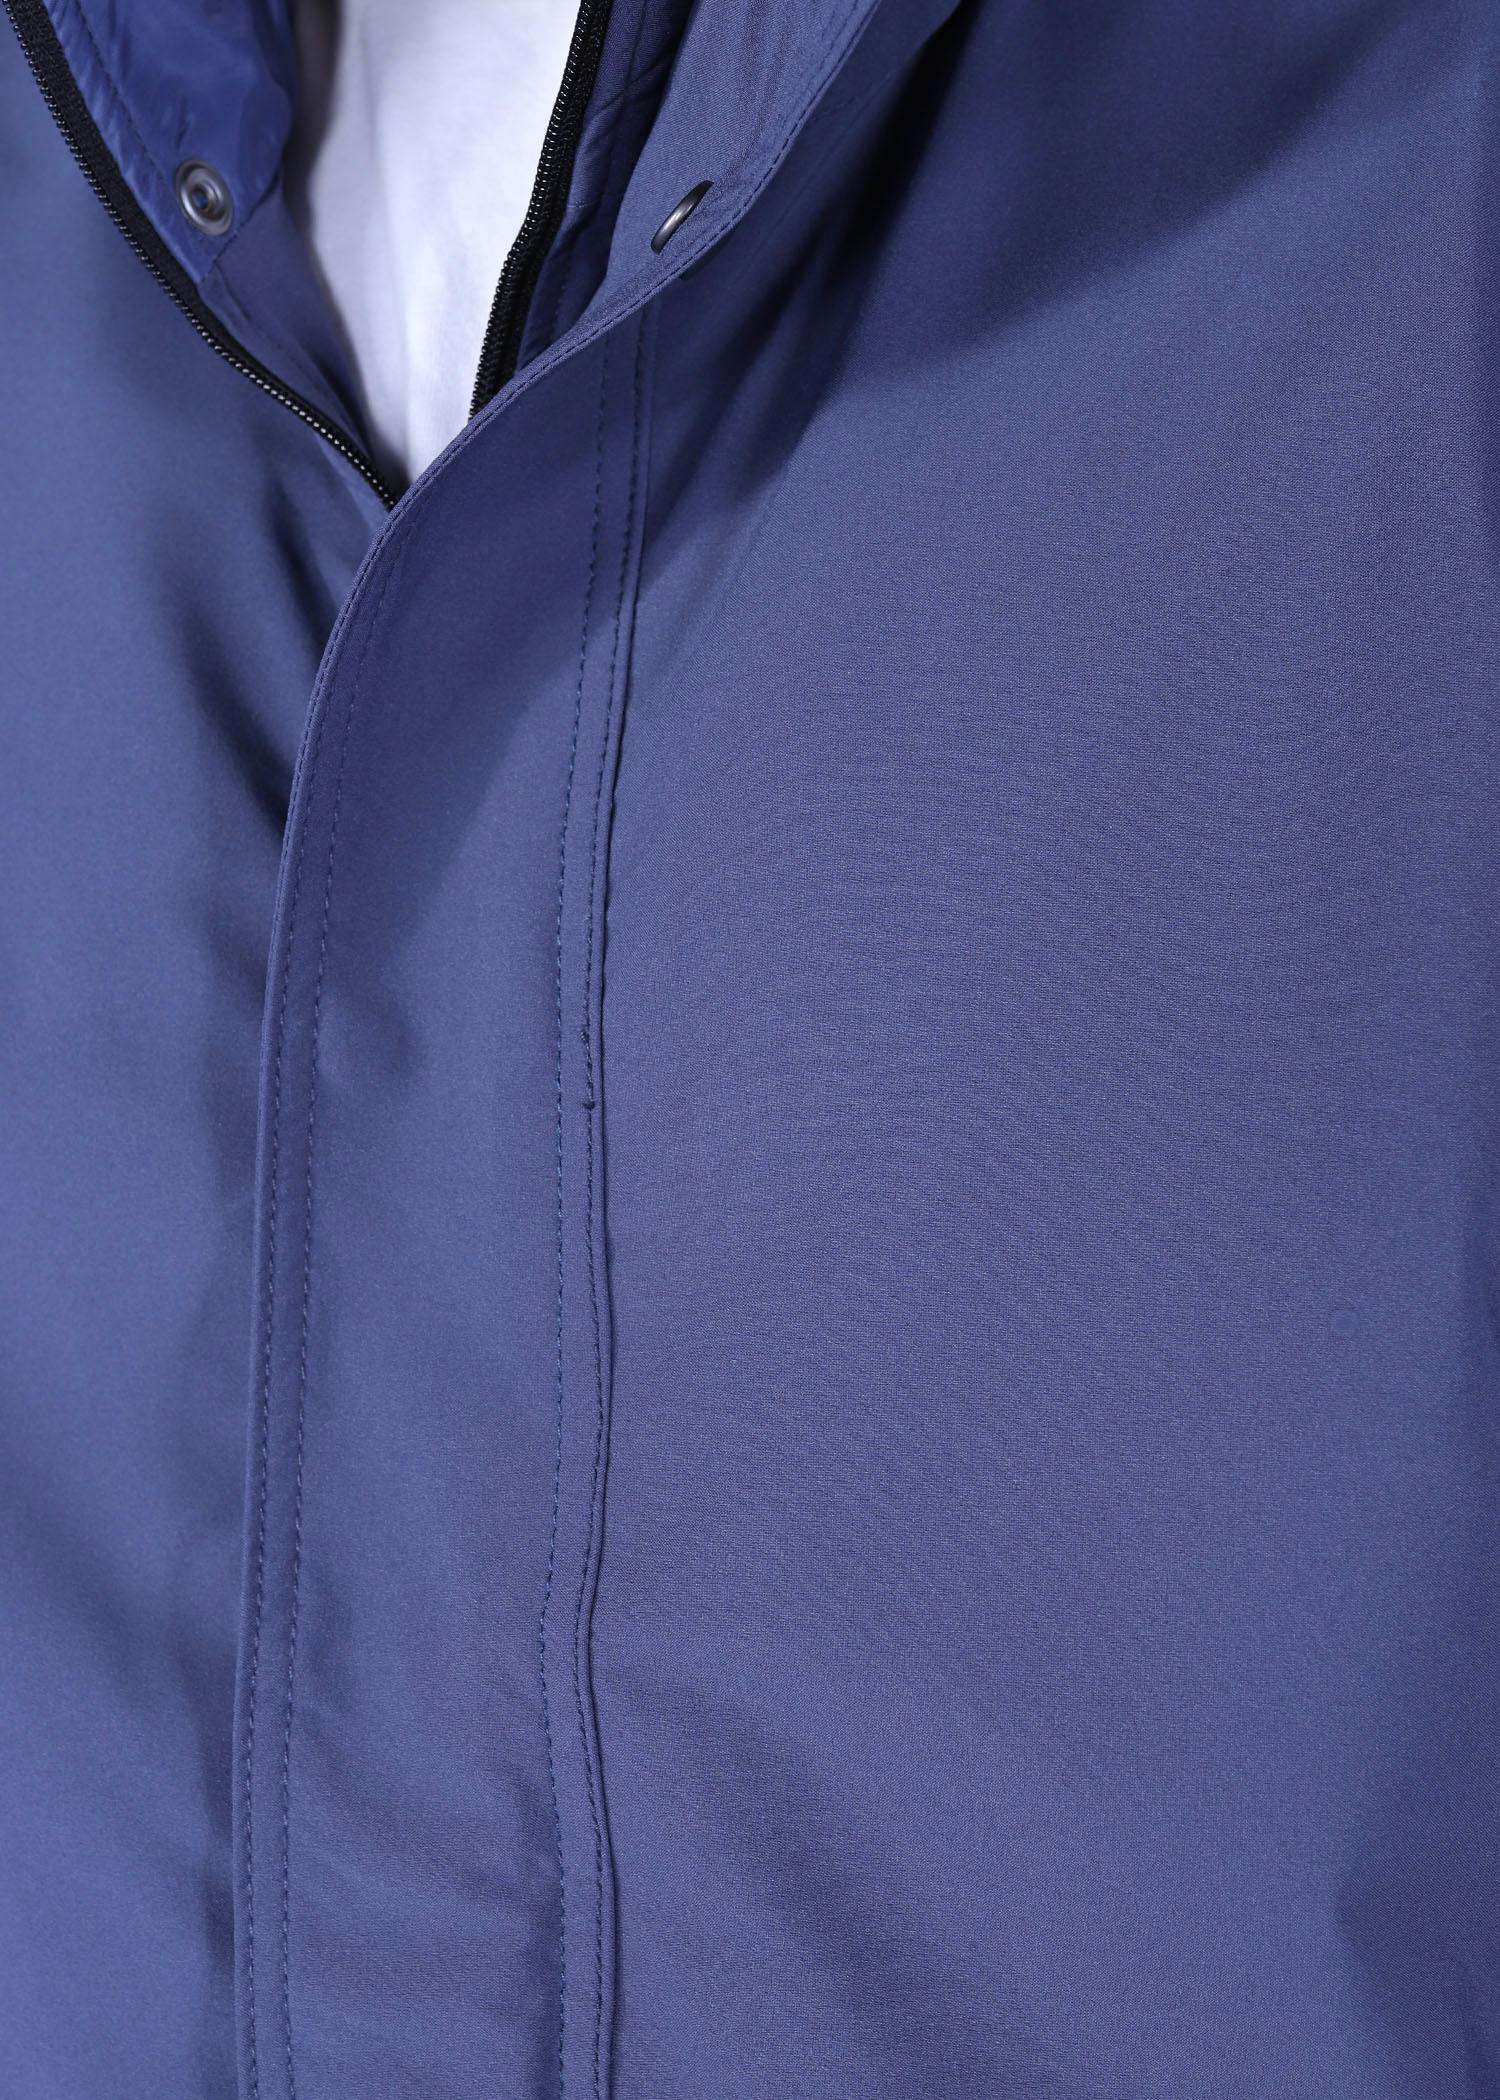 minla jacket navy color close front view